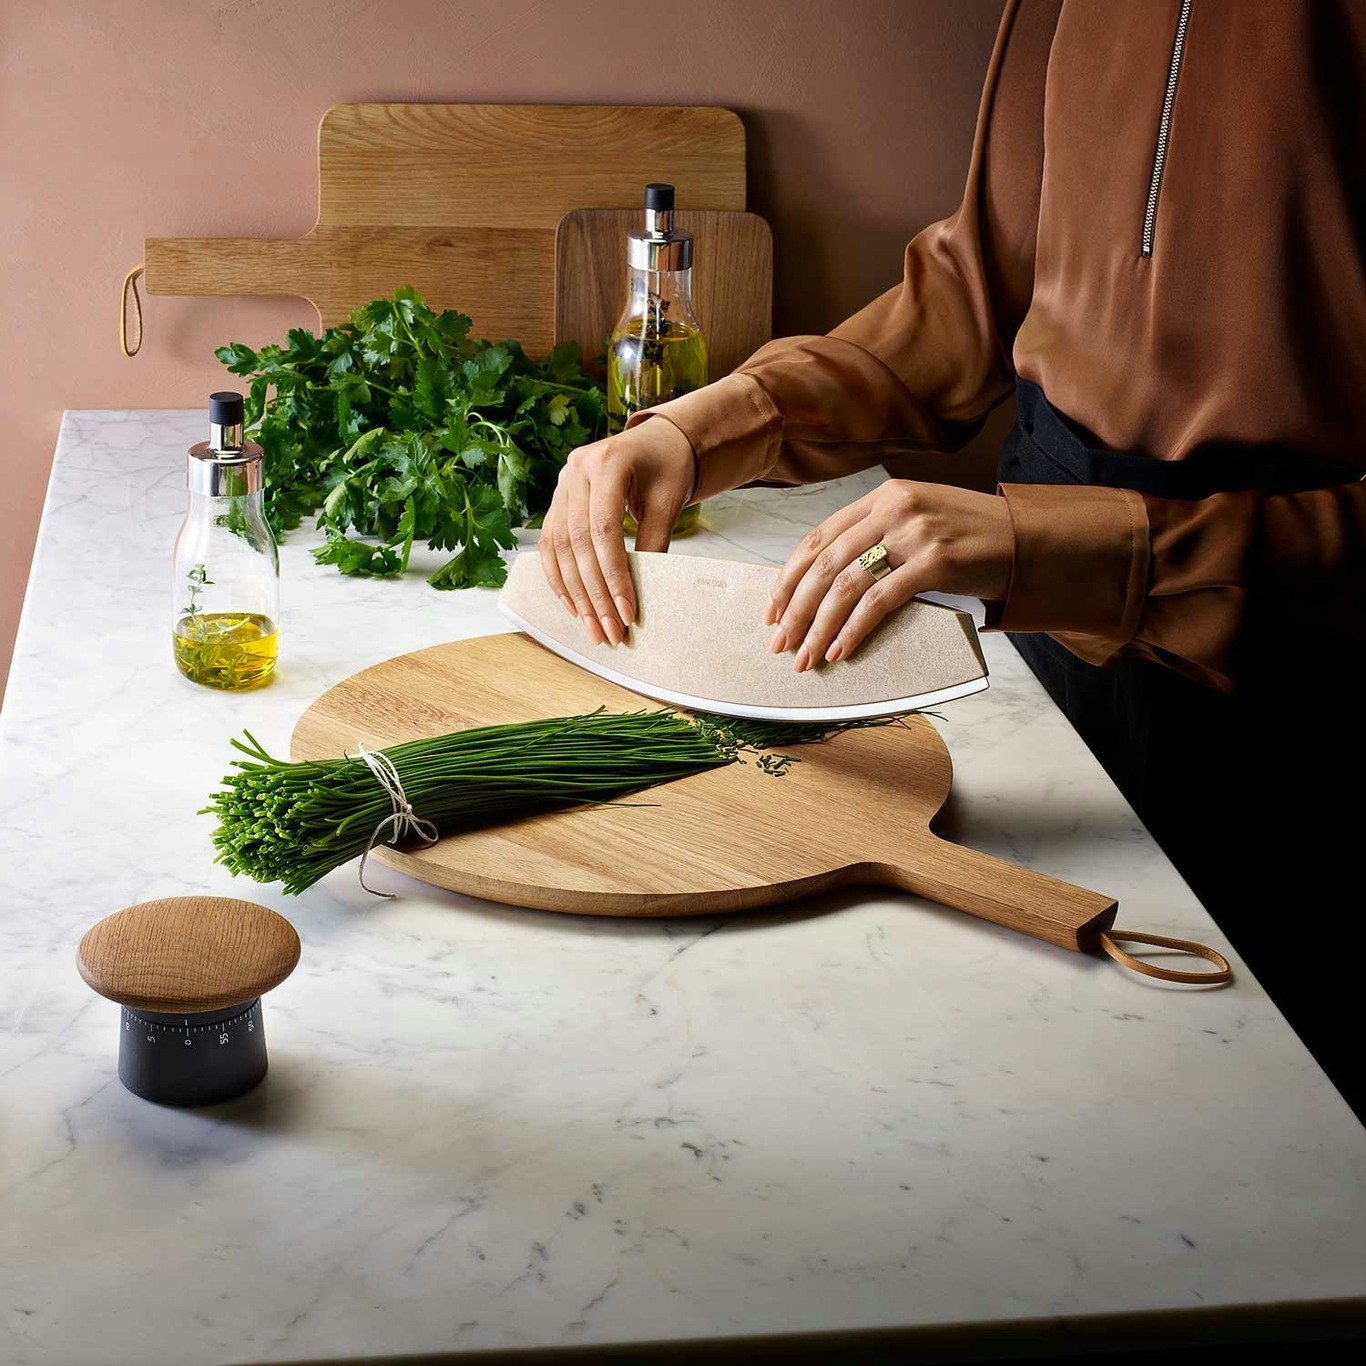 https://royaldesign.com/image/2/eva-solo-nordic-kitchen-timer-oak-1?w=800&quality=80